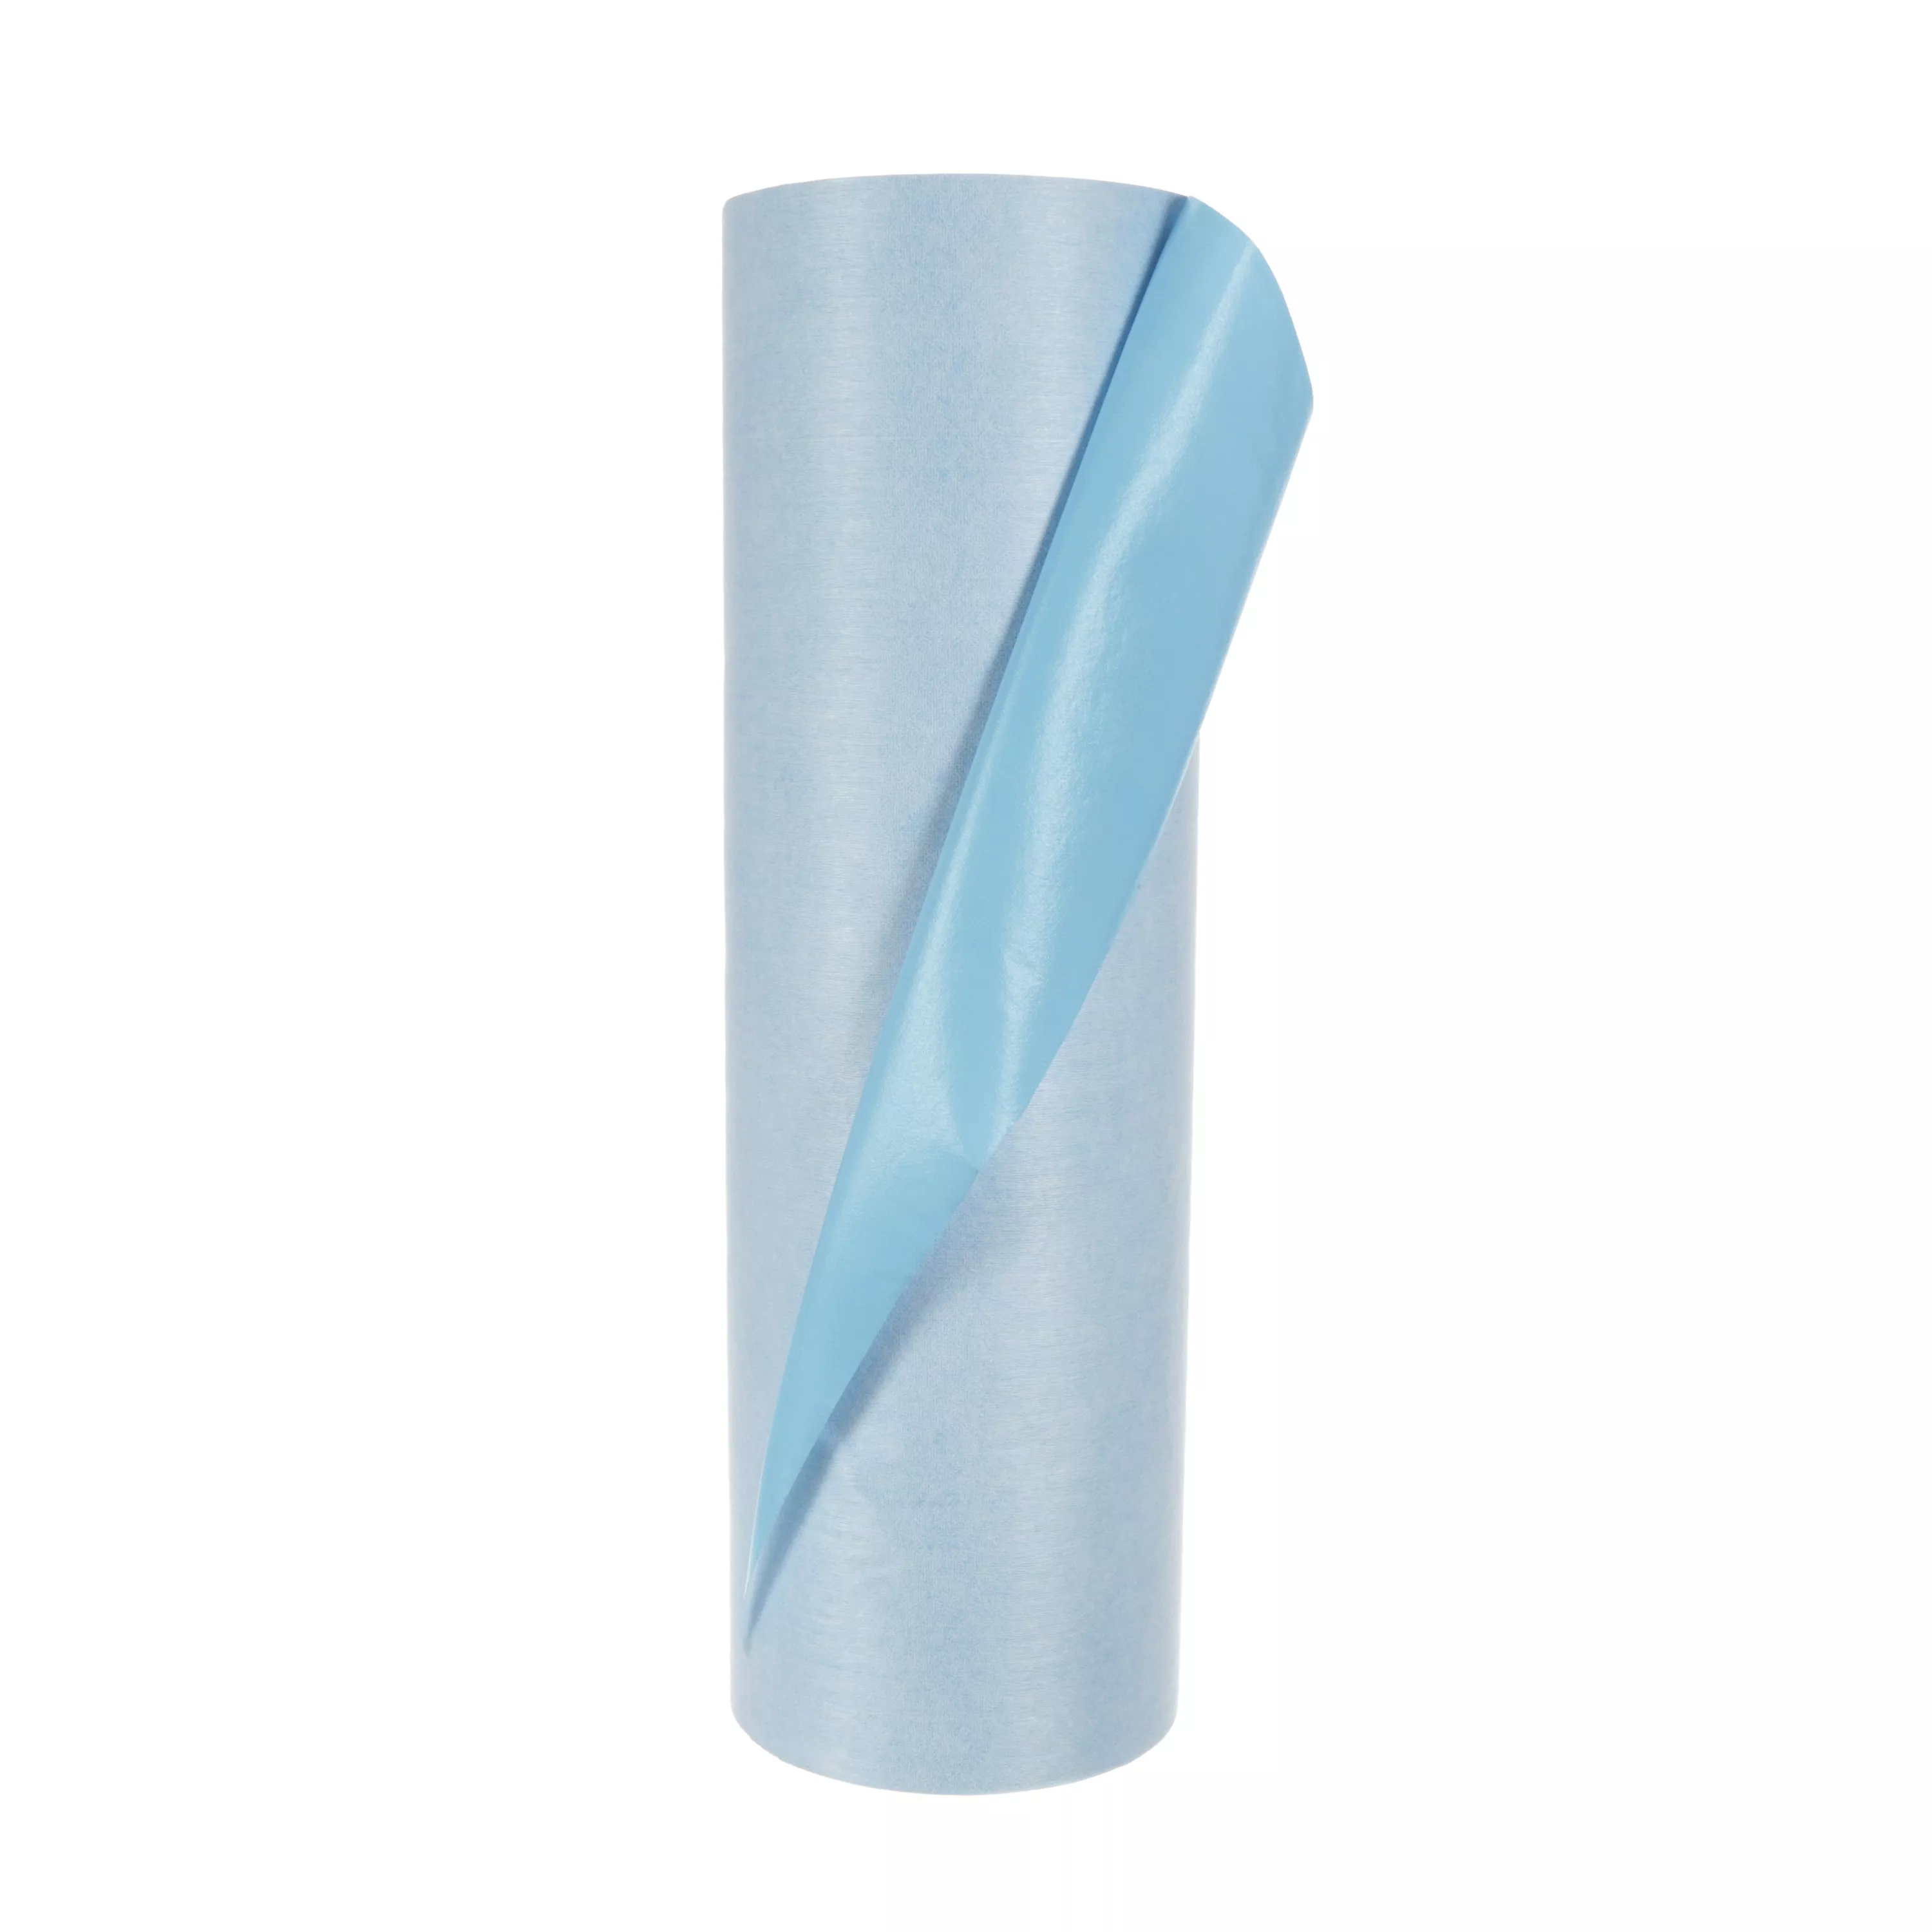 3M™ Self-Stick Liquid Protection Fabric, 36879, Blue, 28 in x 300 ft, 1
roll per case